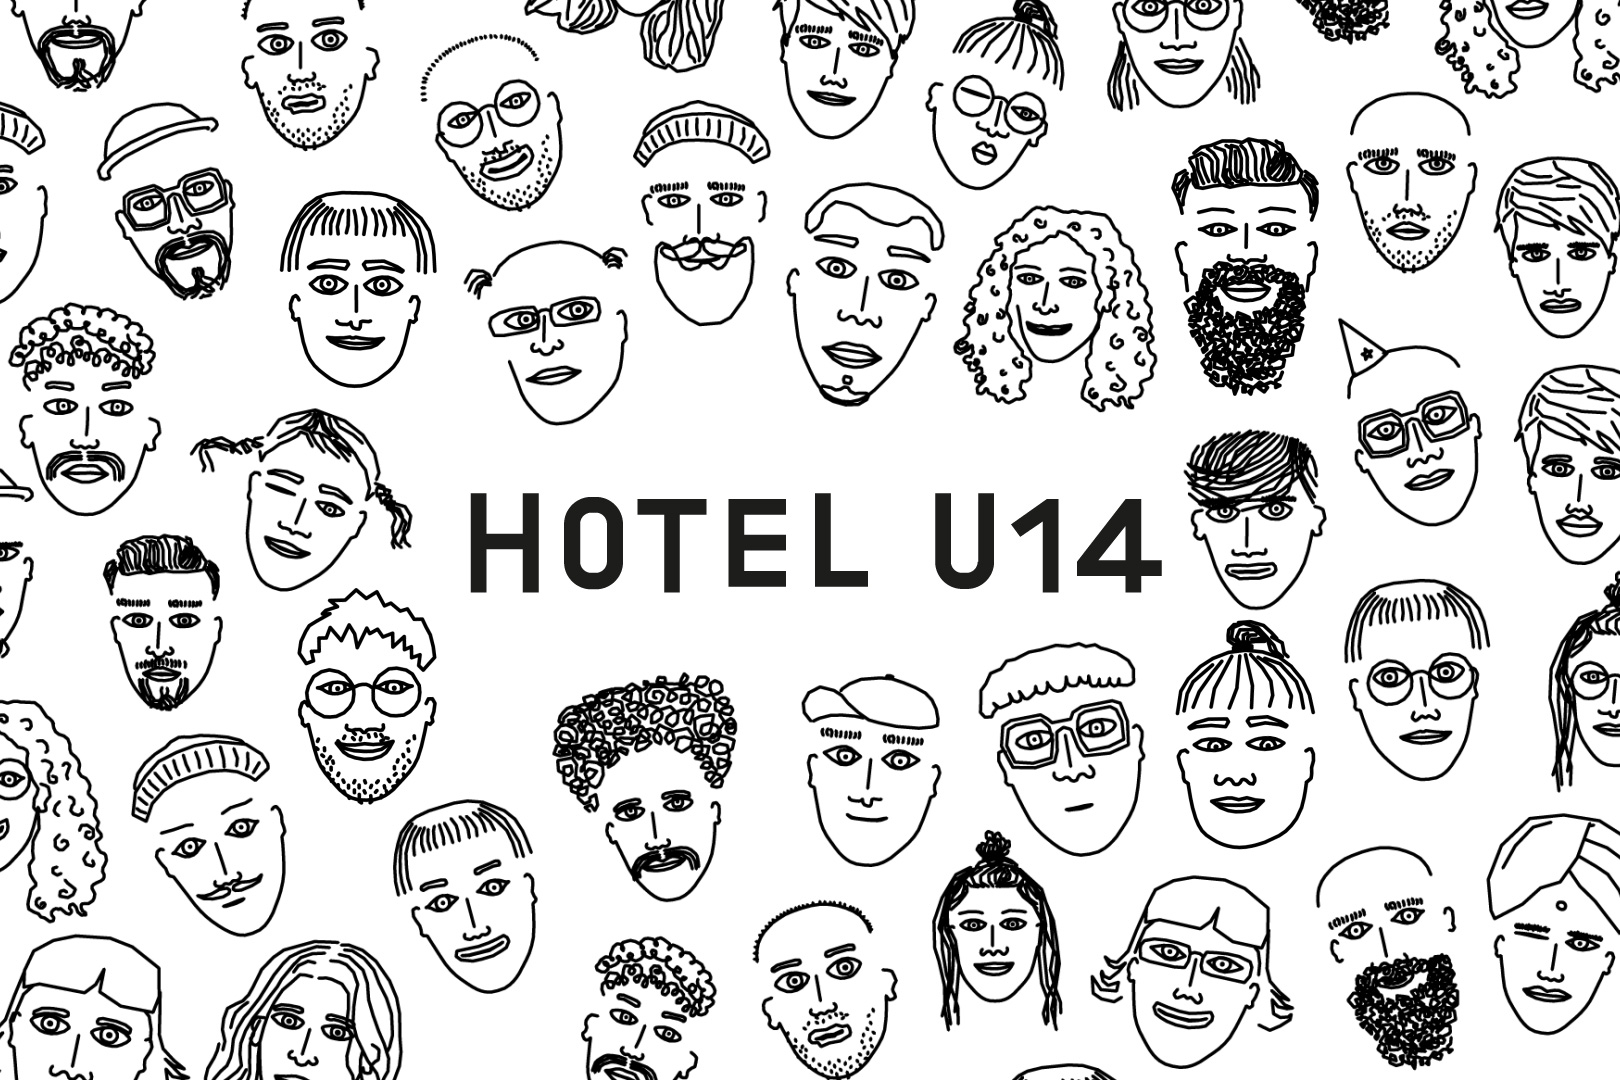 Hotel U14 visual identity